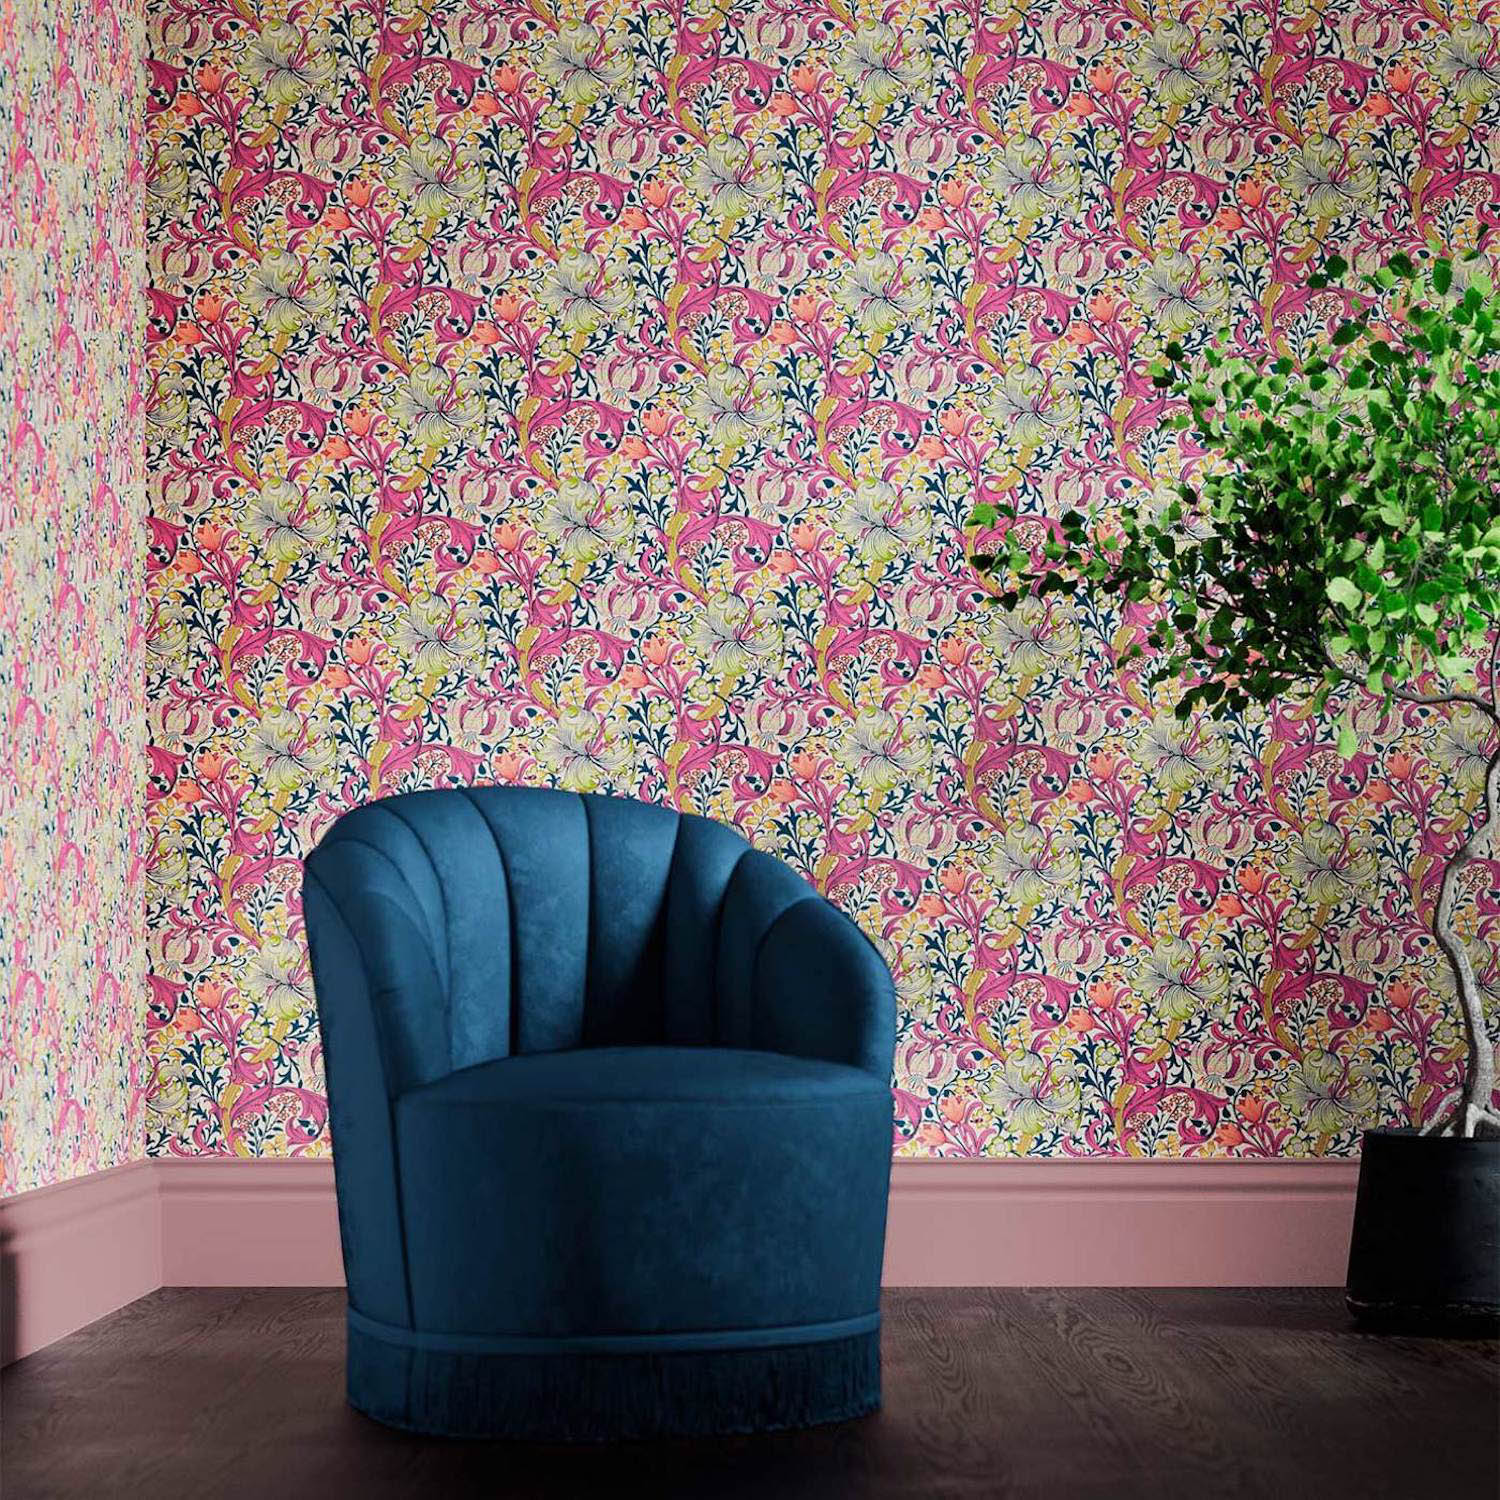 colorful floral wallpaper behind a blue velvet armchair